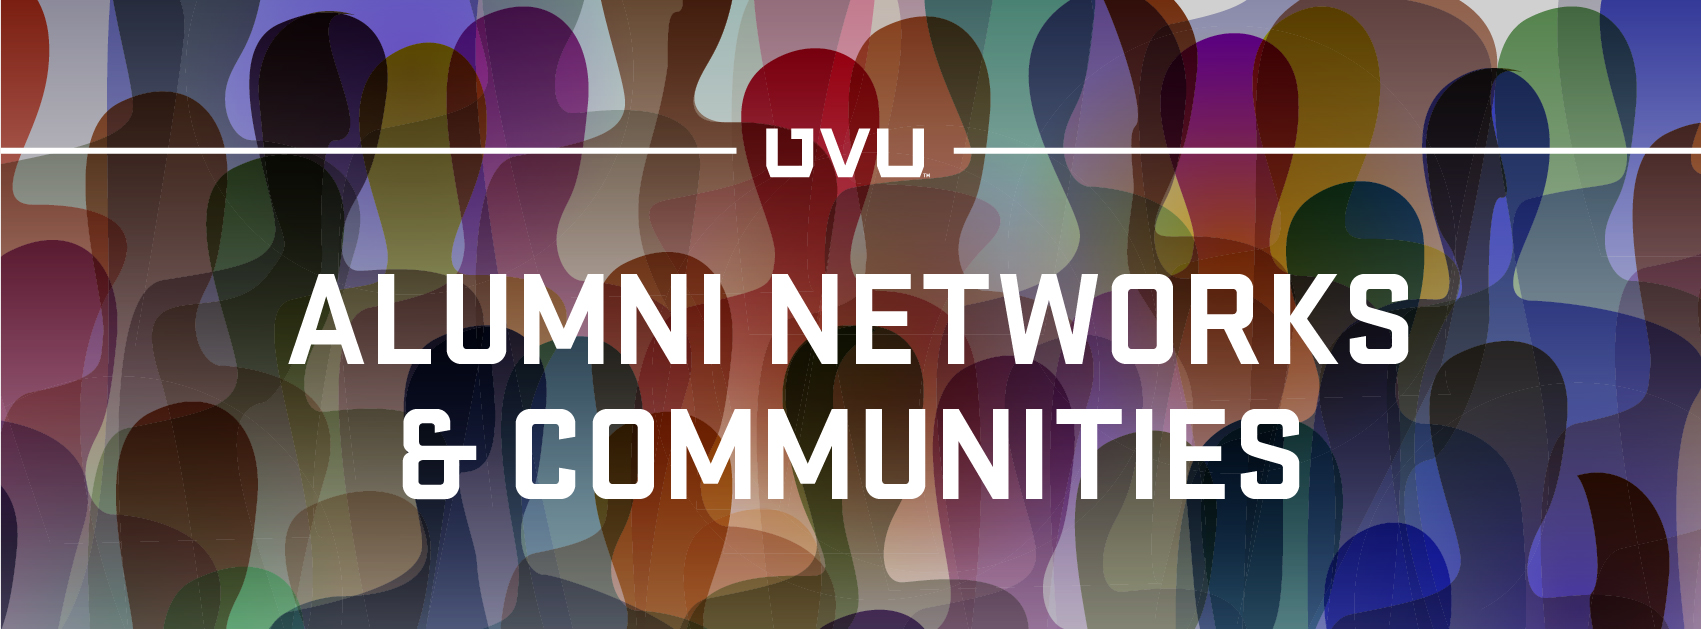 UVU Alumni Networks and Communities